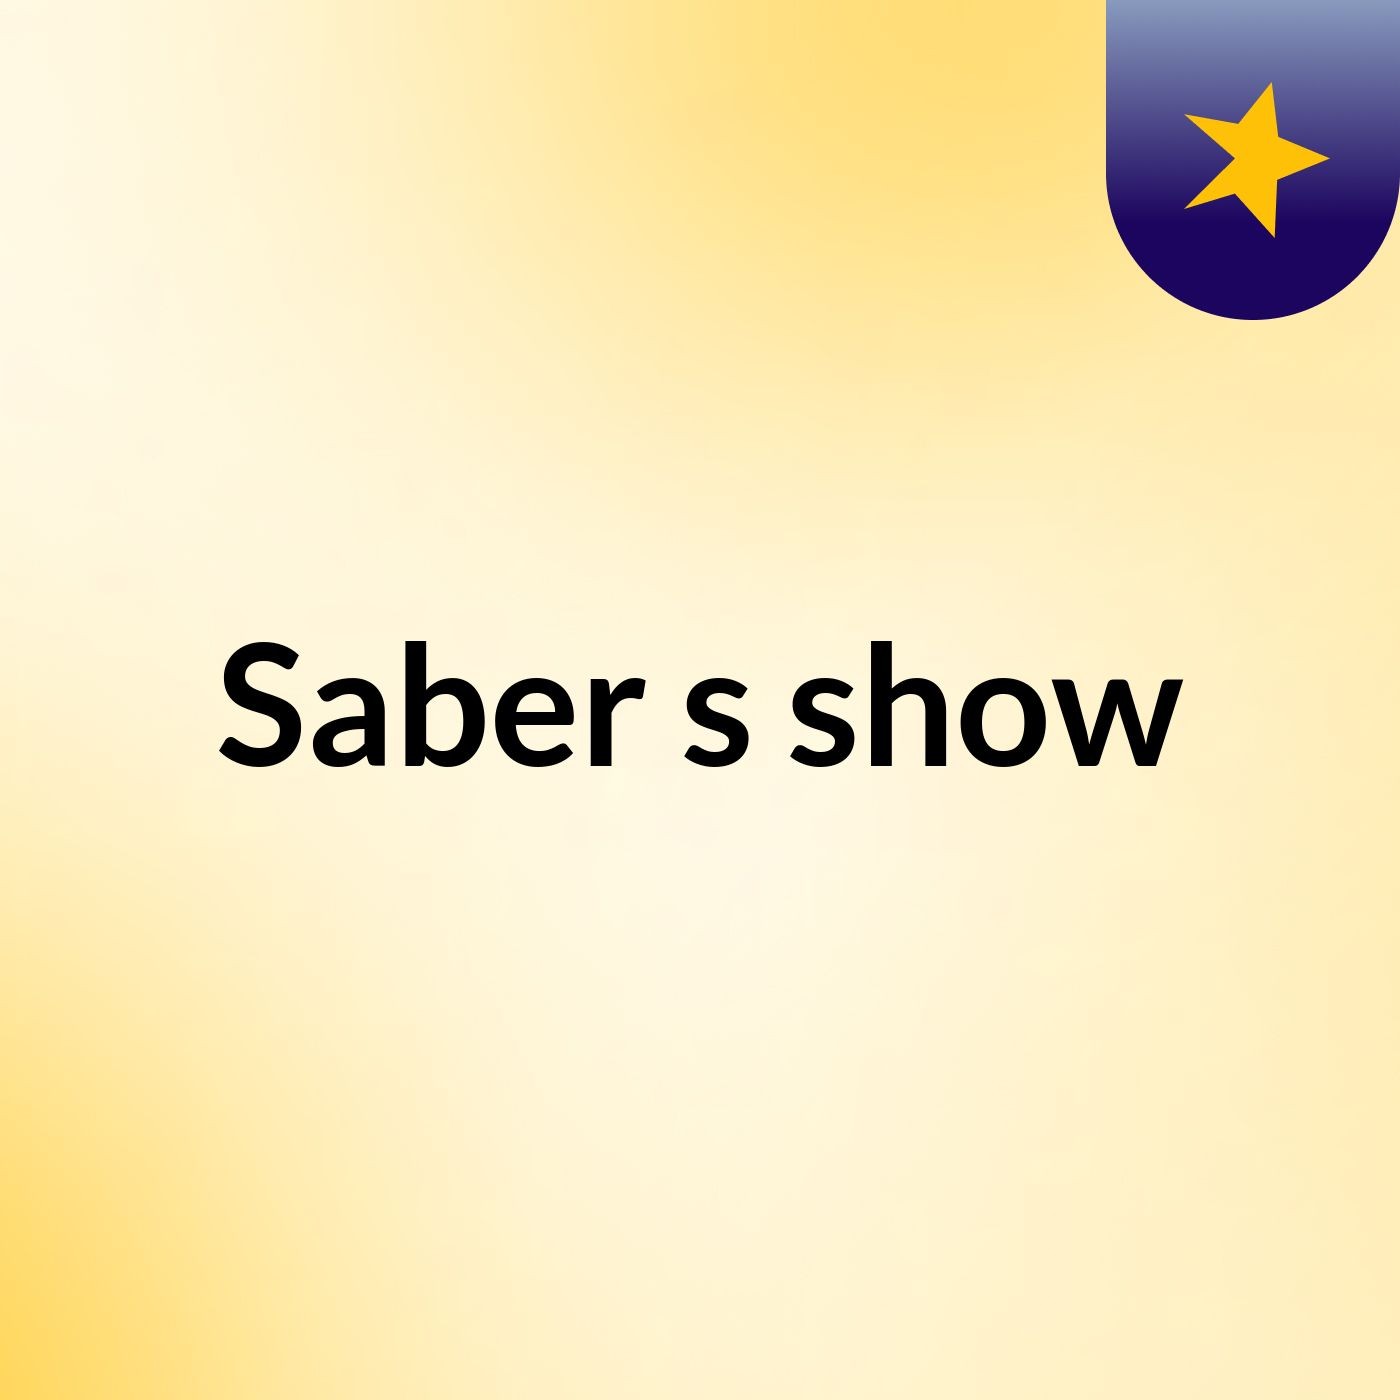 Episode 3 - Saber's show